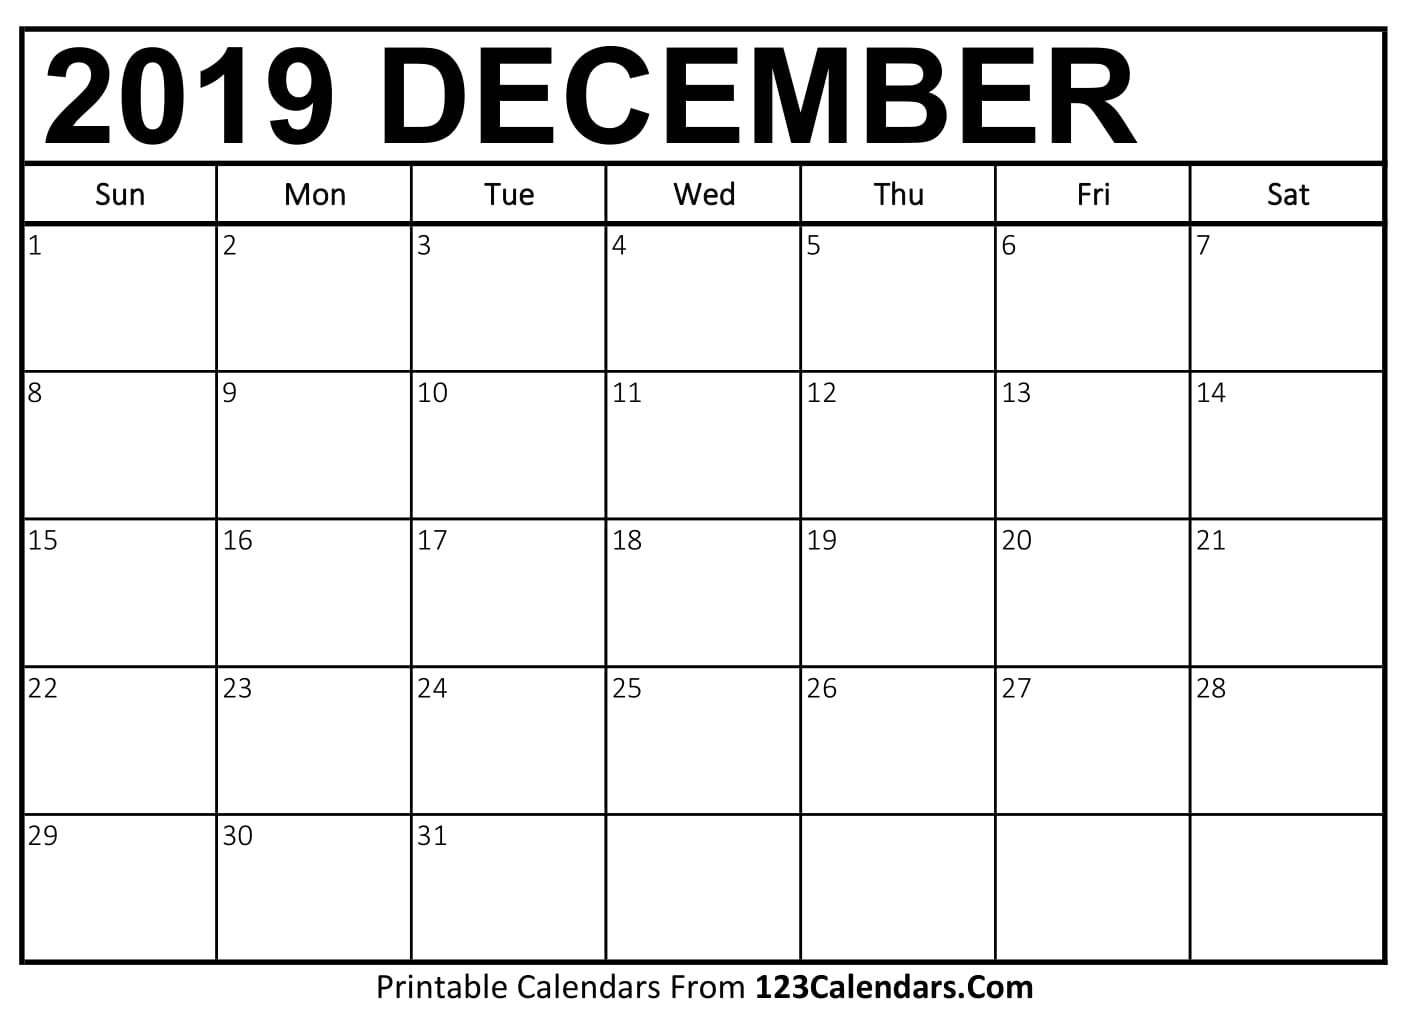 December Printable Calendar Template For 2018